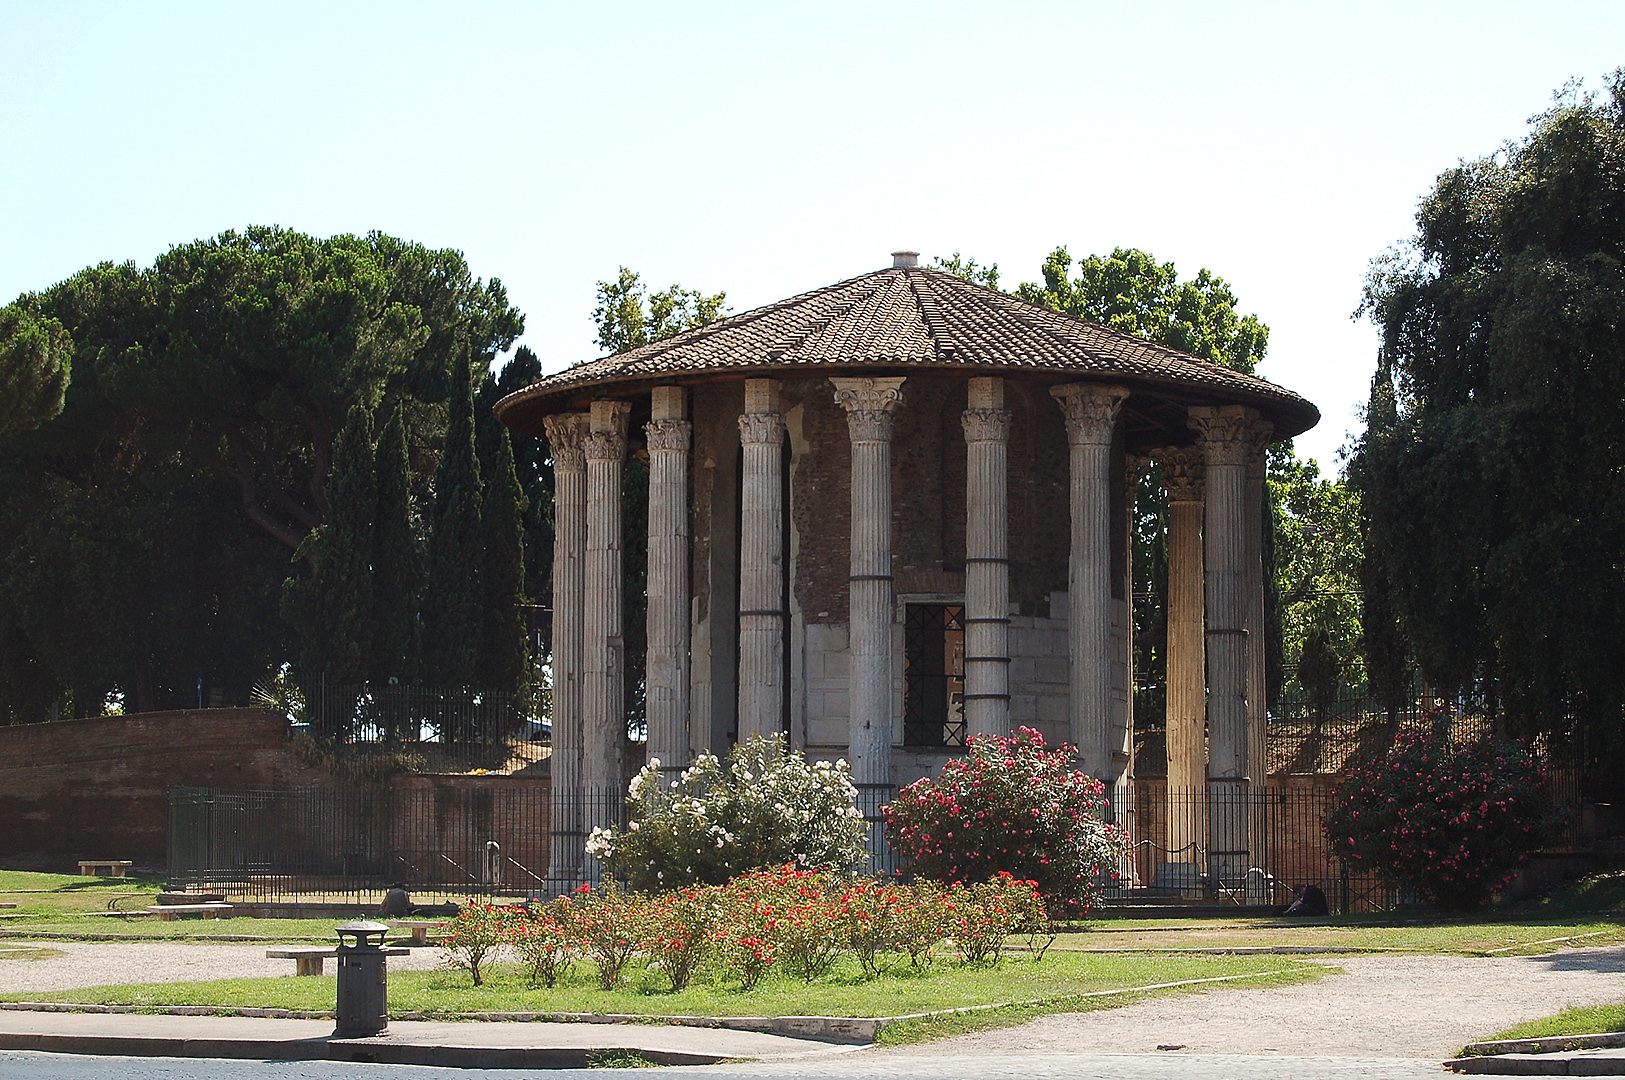 Tempel van Hercules Invictus, Rome, Italië, Temple of Hercules Victor, Rome, Italy.